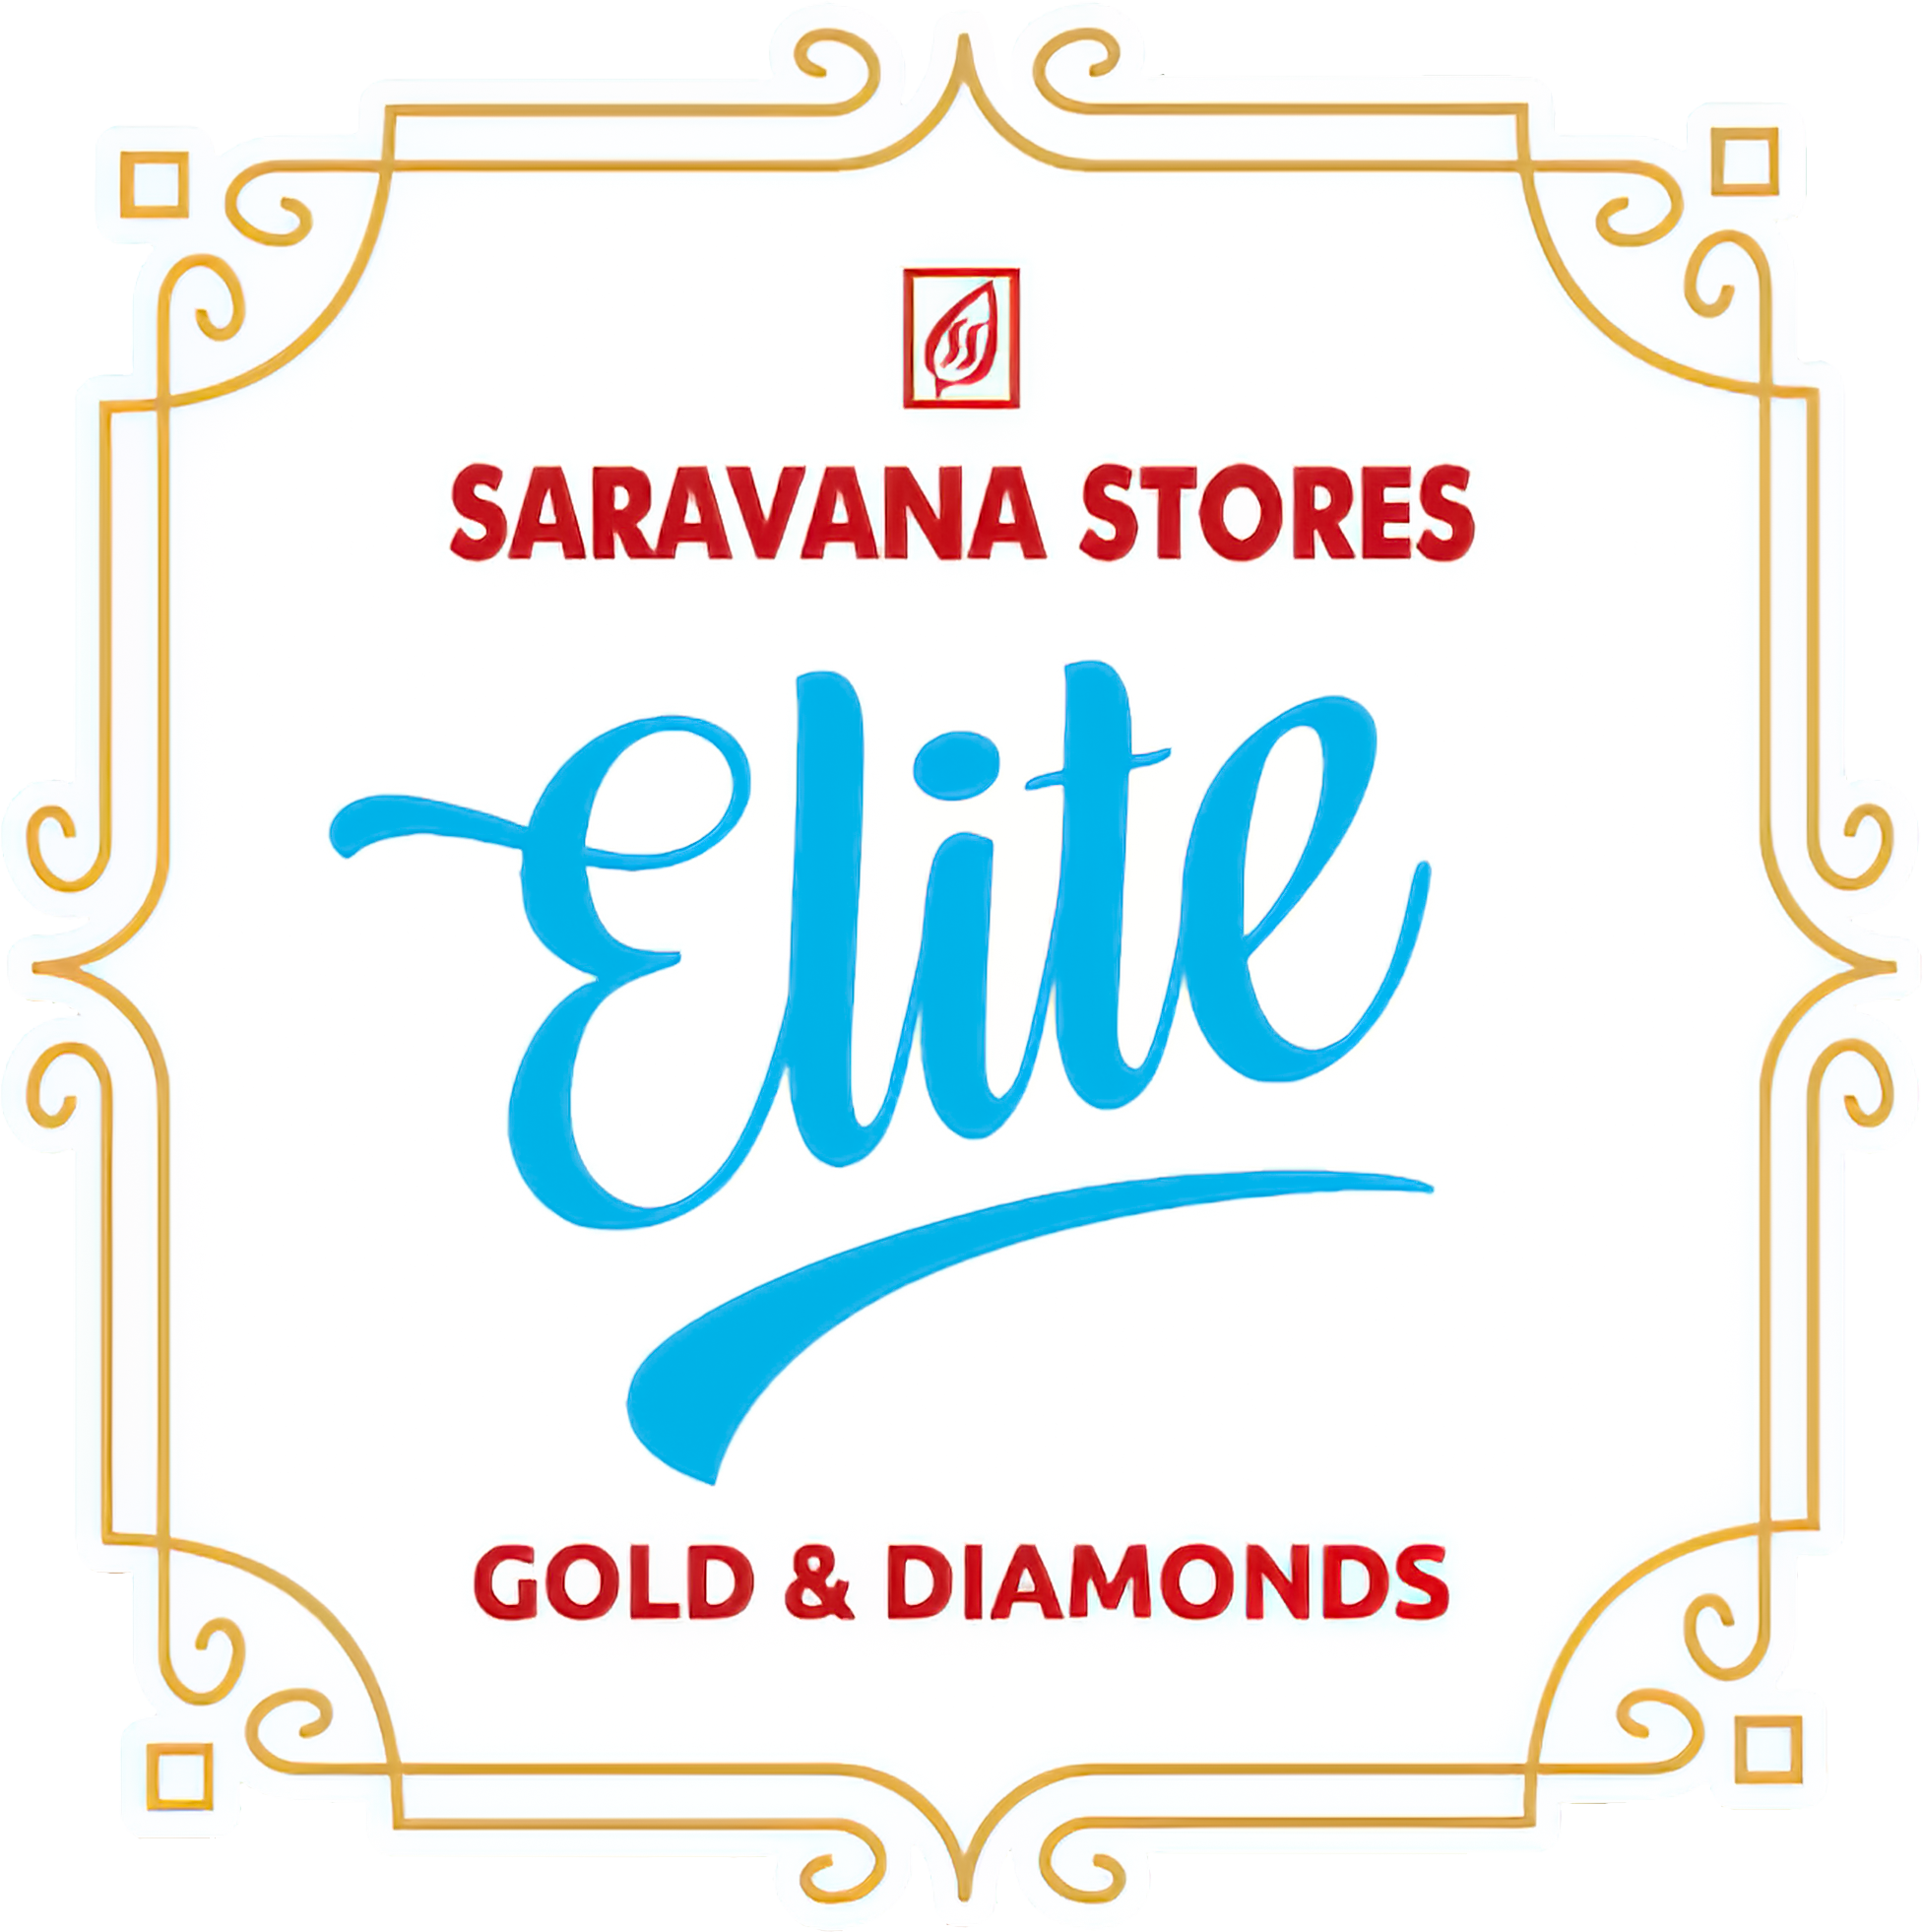 Saravana Stores owner debuts as Hero !